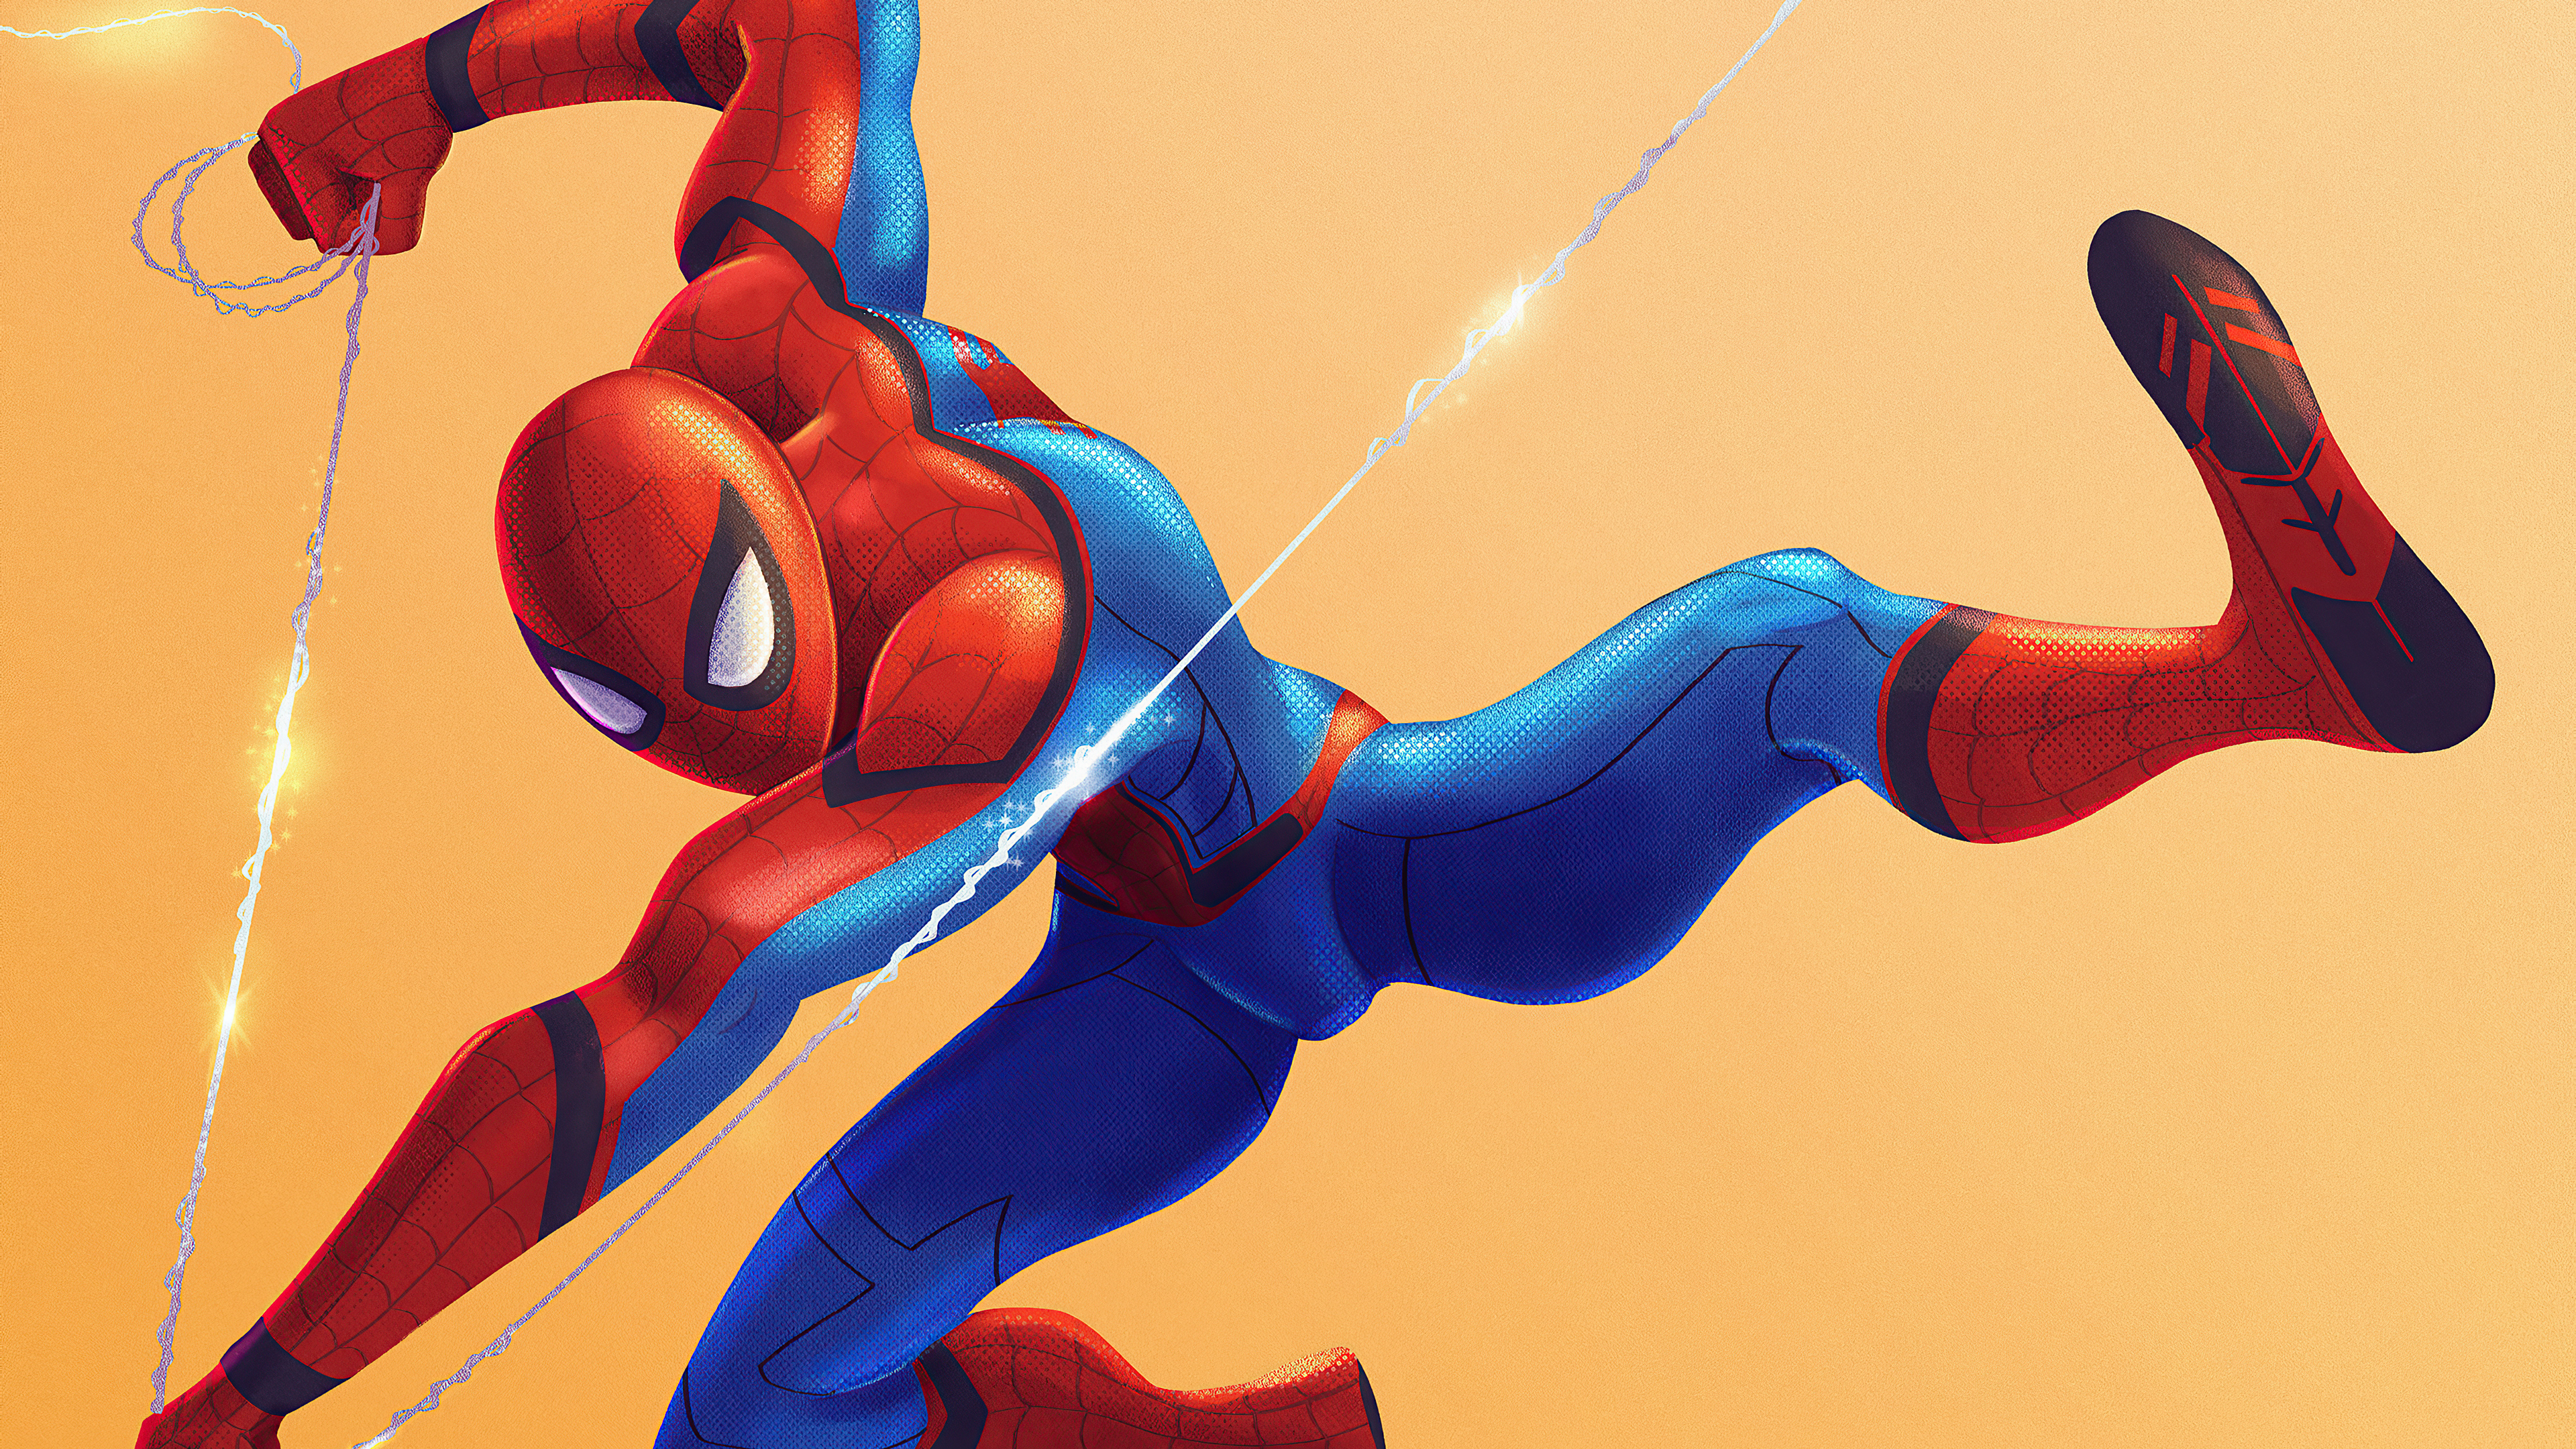 Spider Man 2020 Artwork New Wallpaper,HD Superheroes Wallpapers,4k